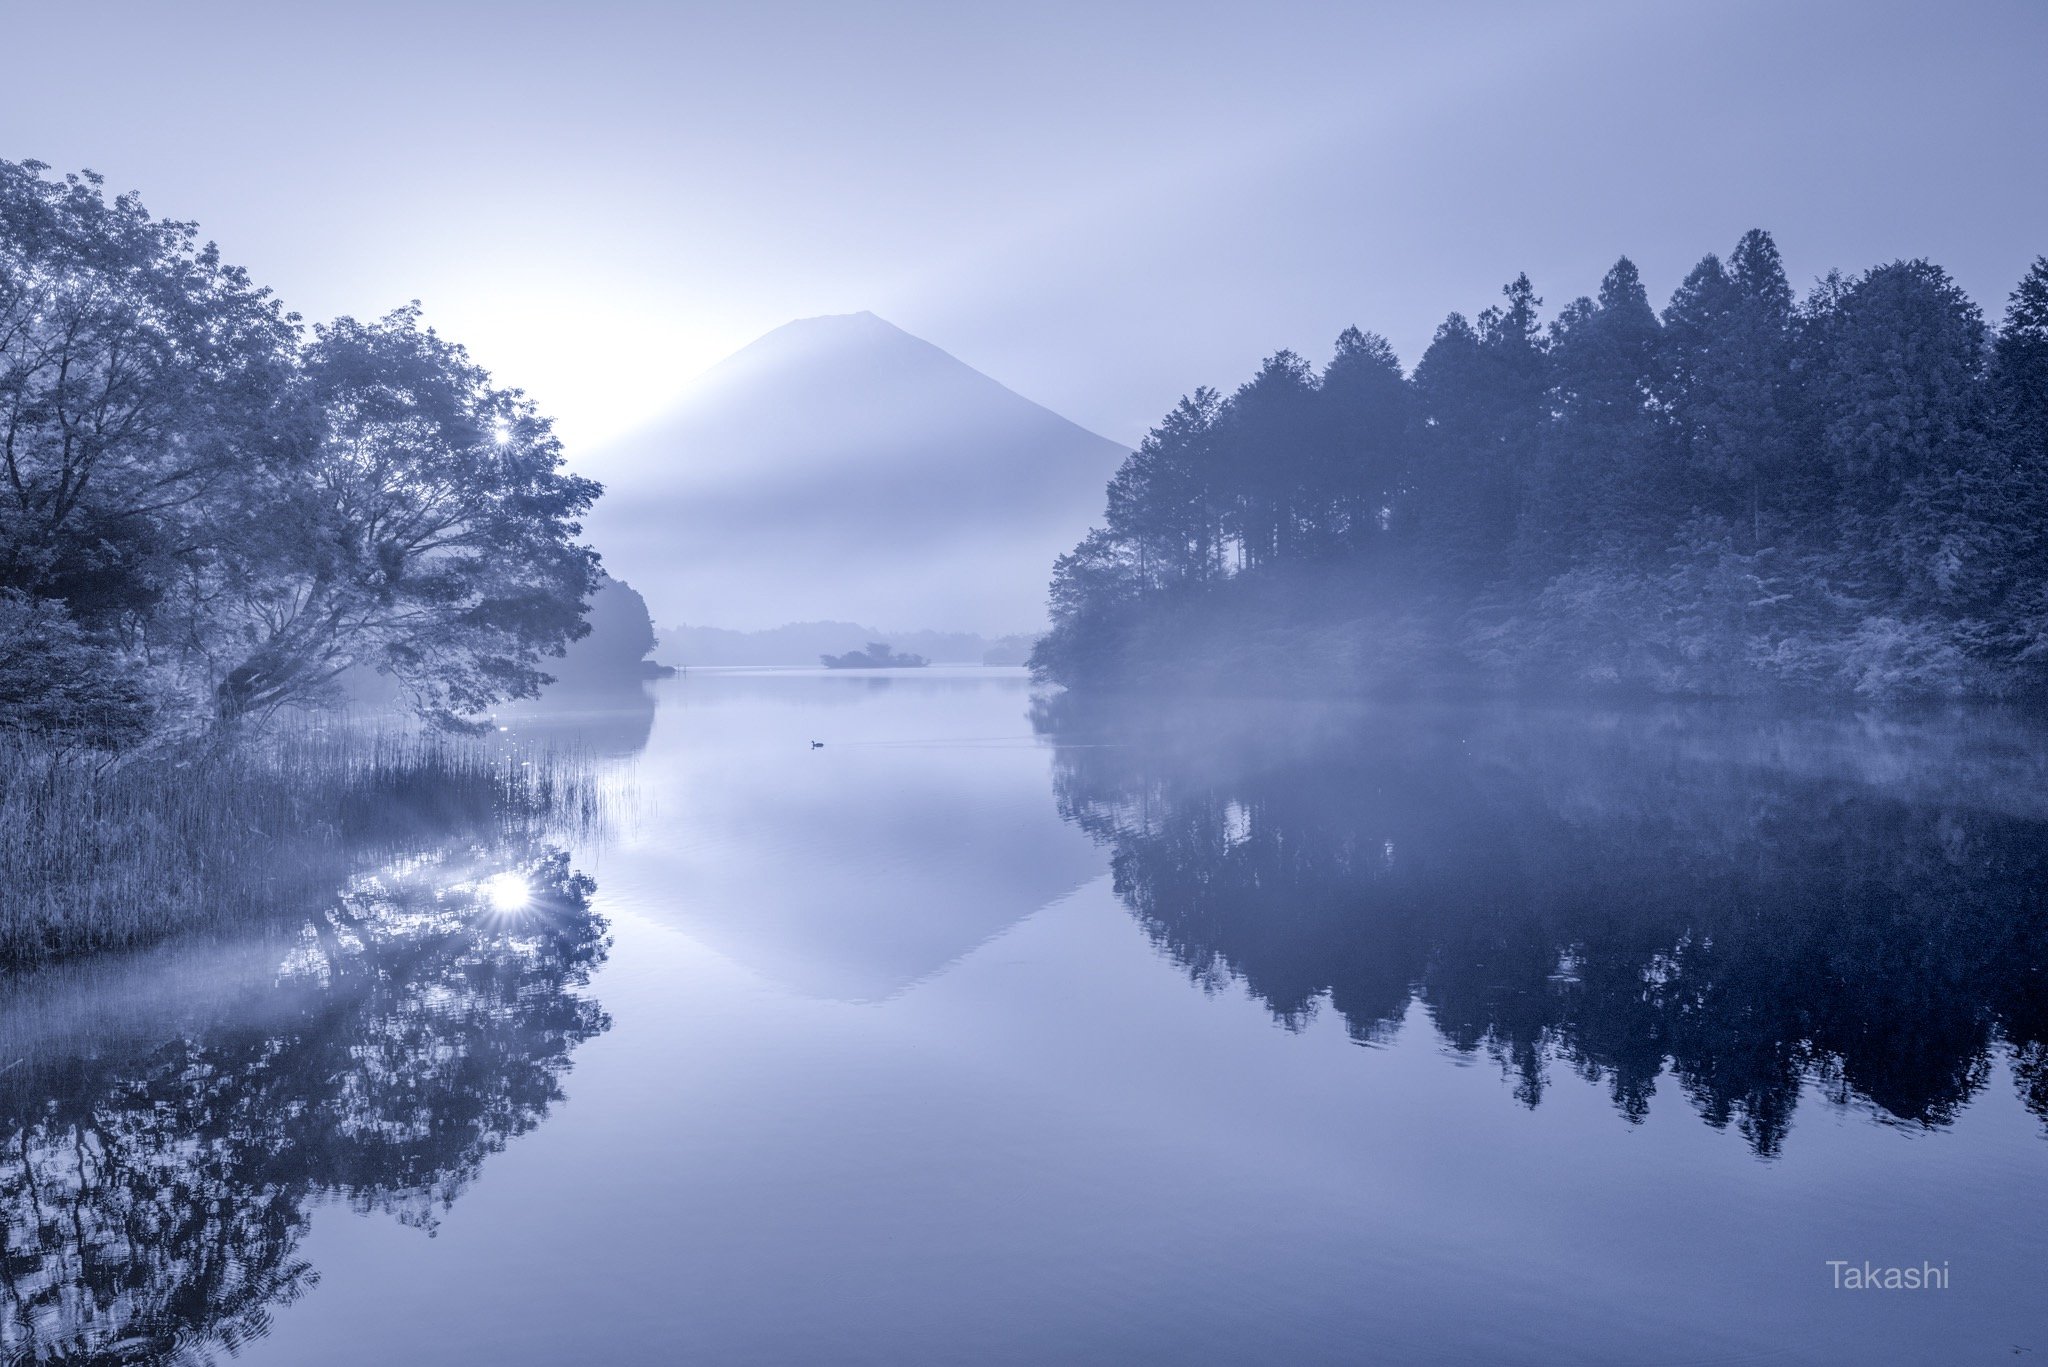 Fuji,mountain,Japan,haze,gas,reflection,water,lake,beautiful,blue,tree,, Takashi